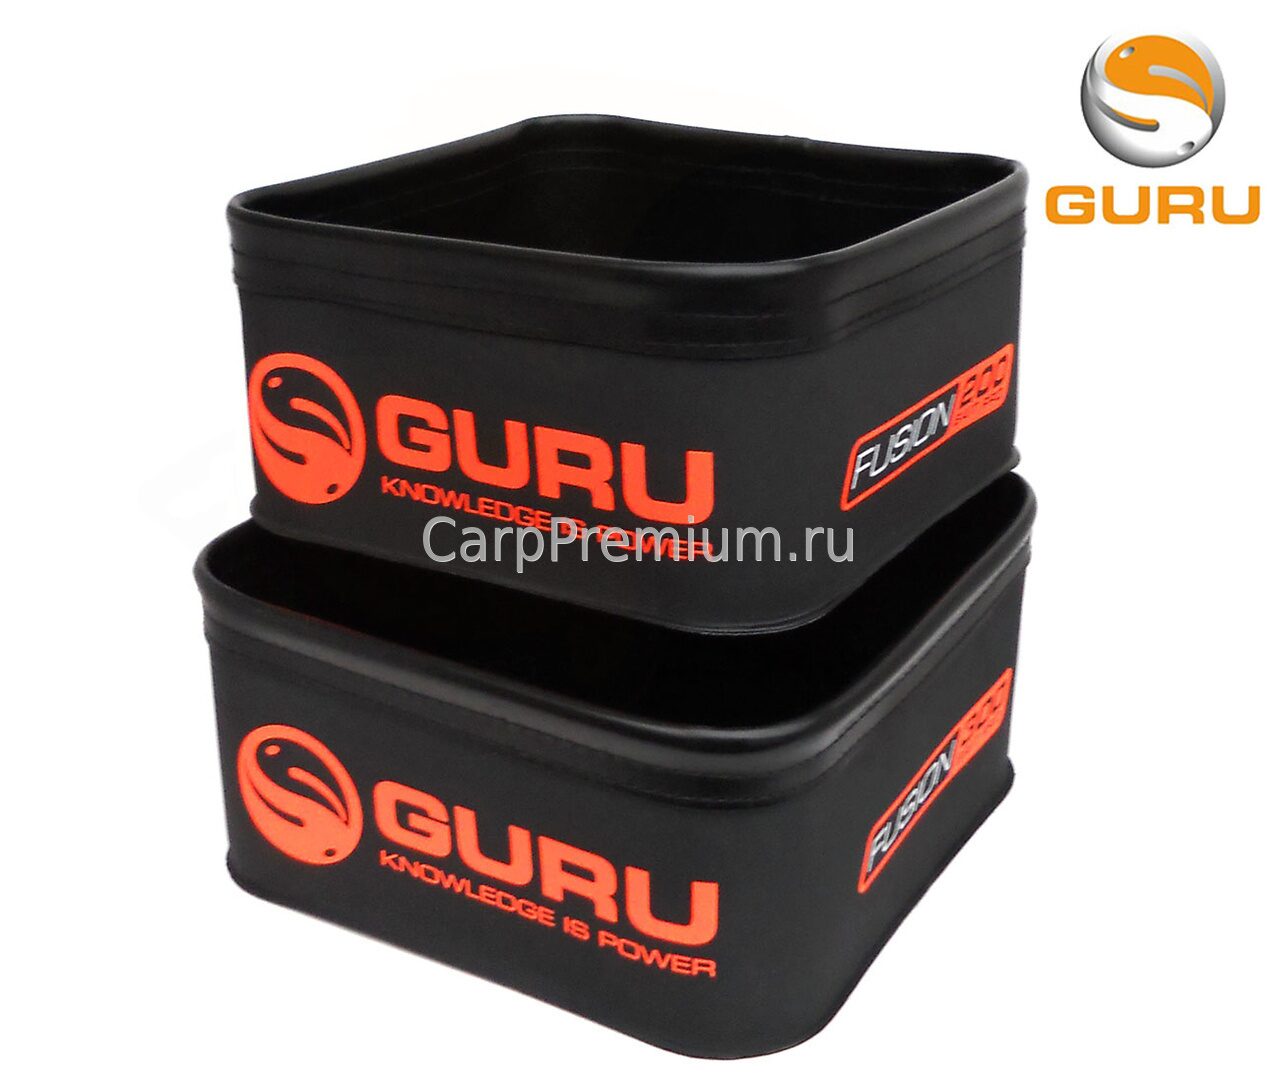 Набор коробок Guru (Гуру) - Bait Pro 200 + 300 Combo, 2 шт